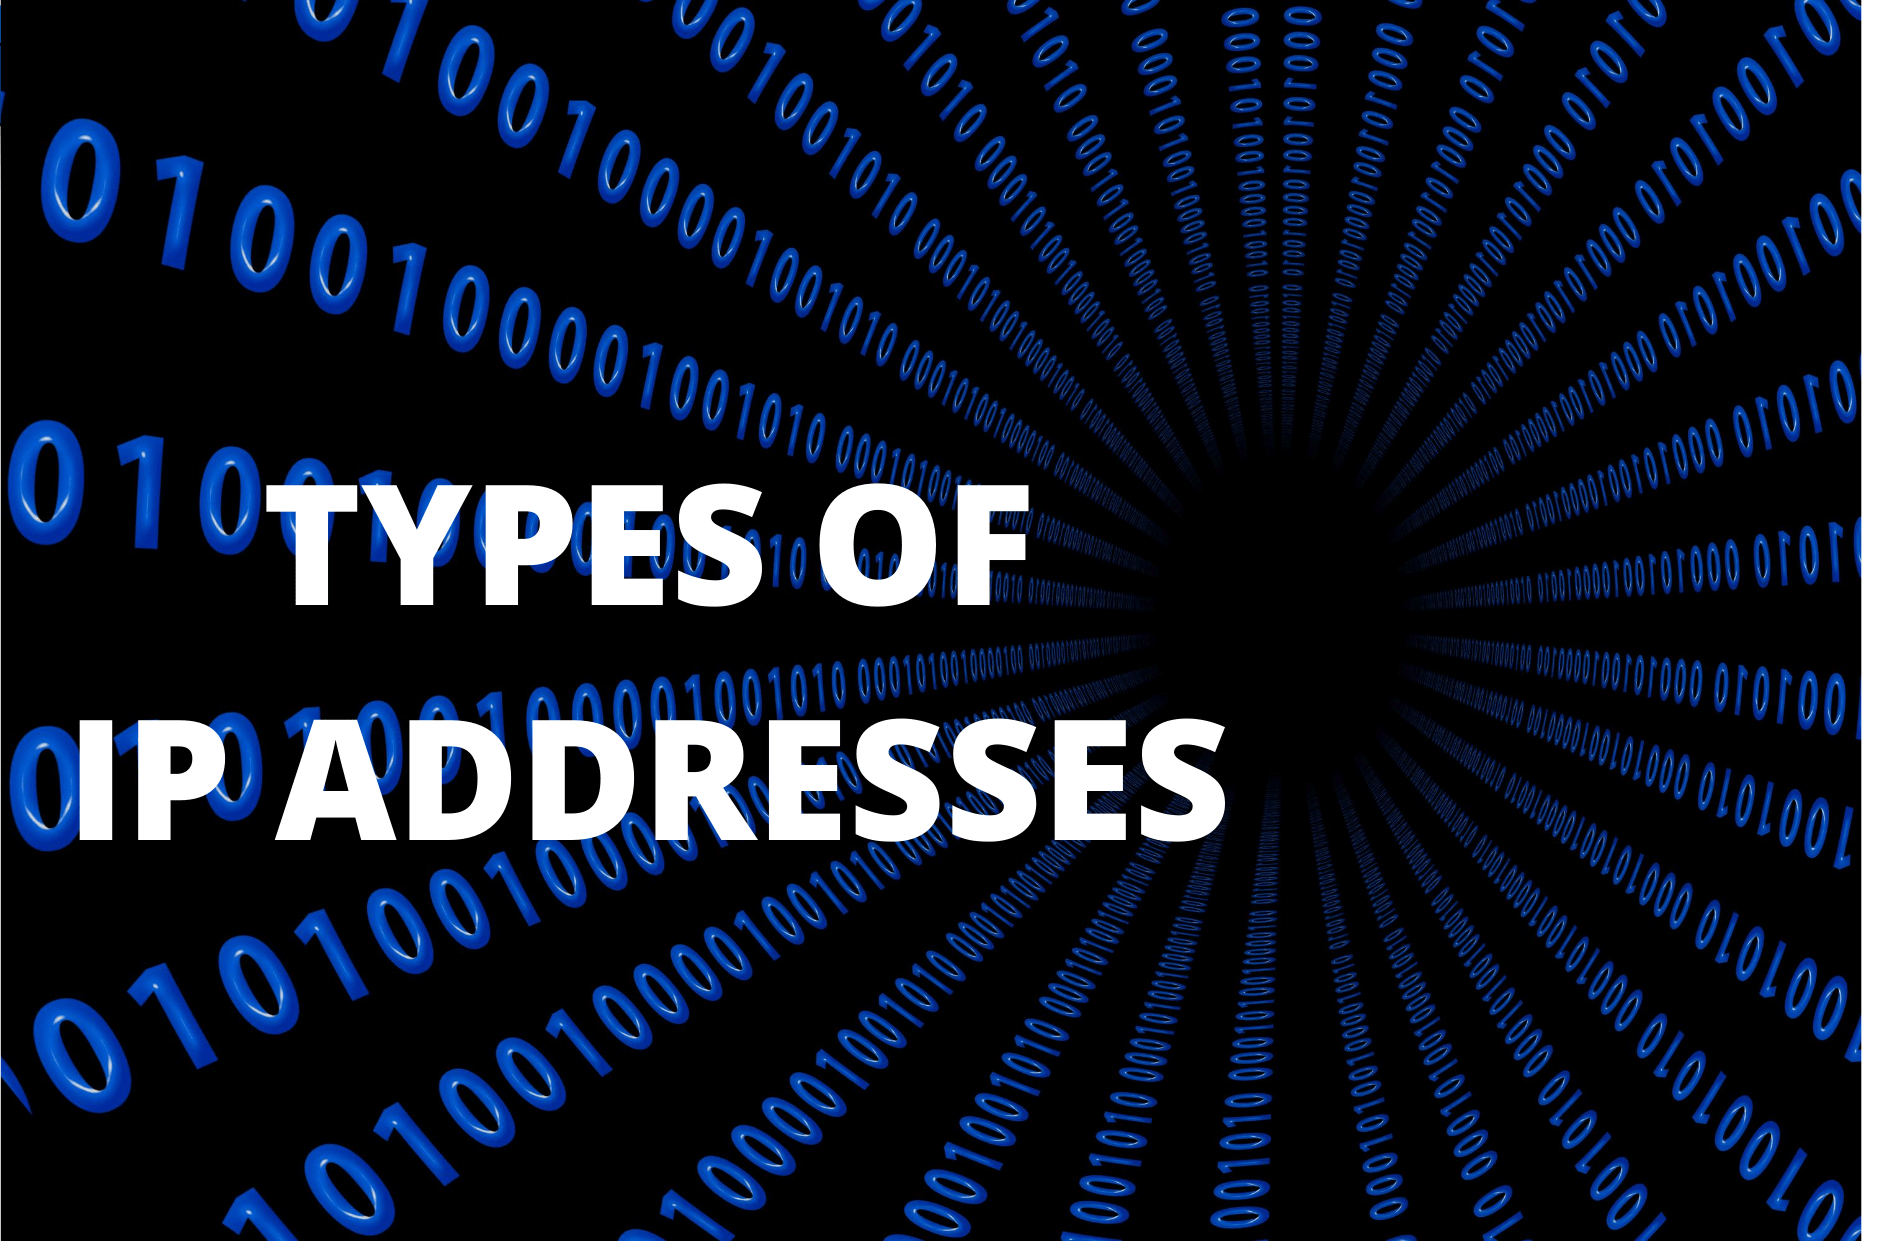 Types OF IP ADDRESSES